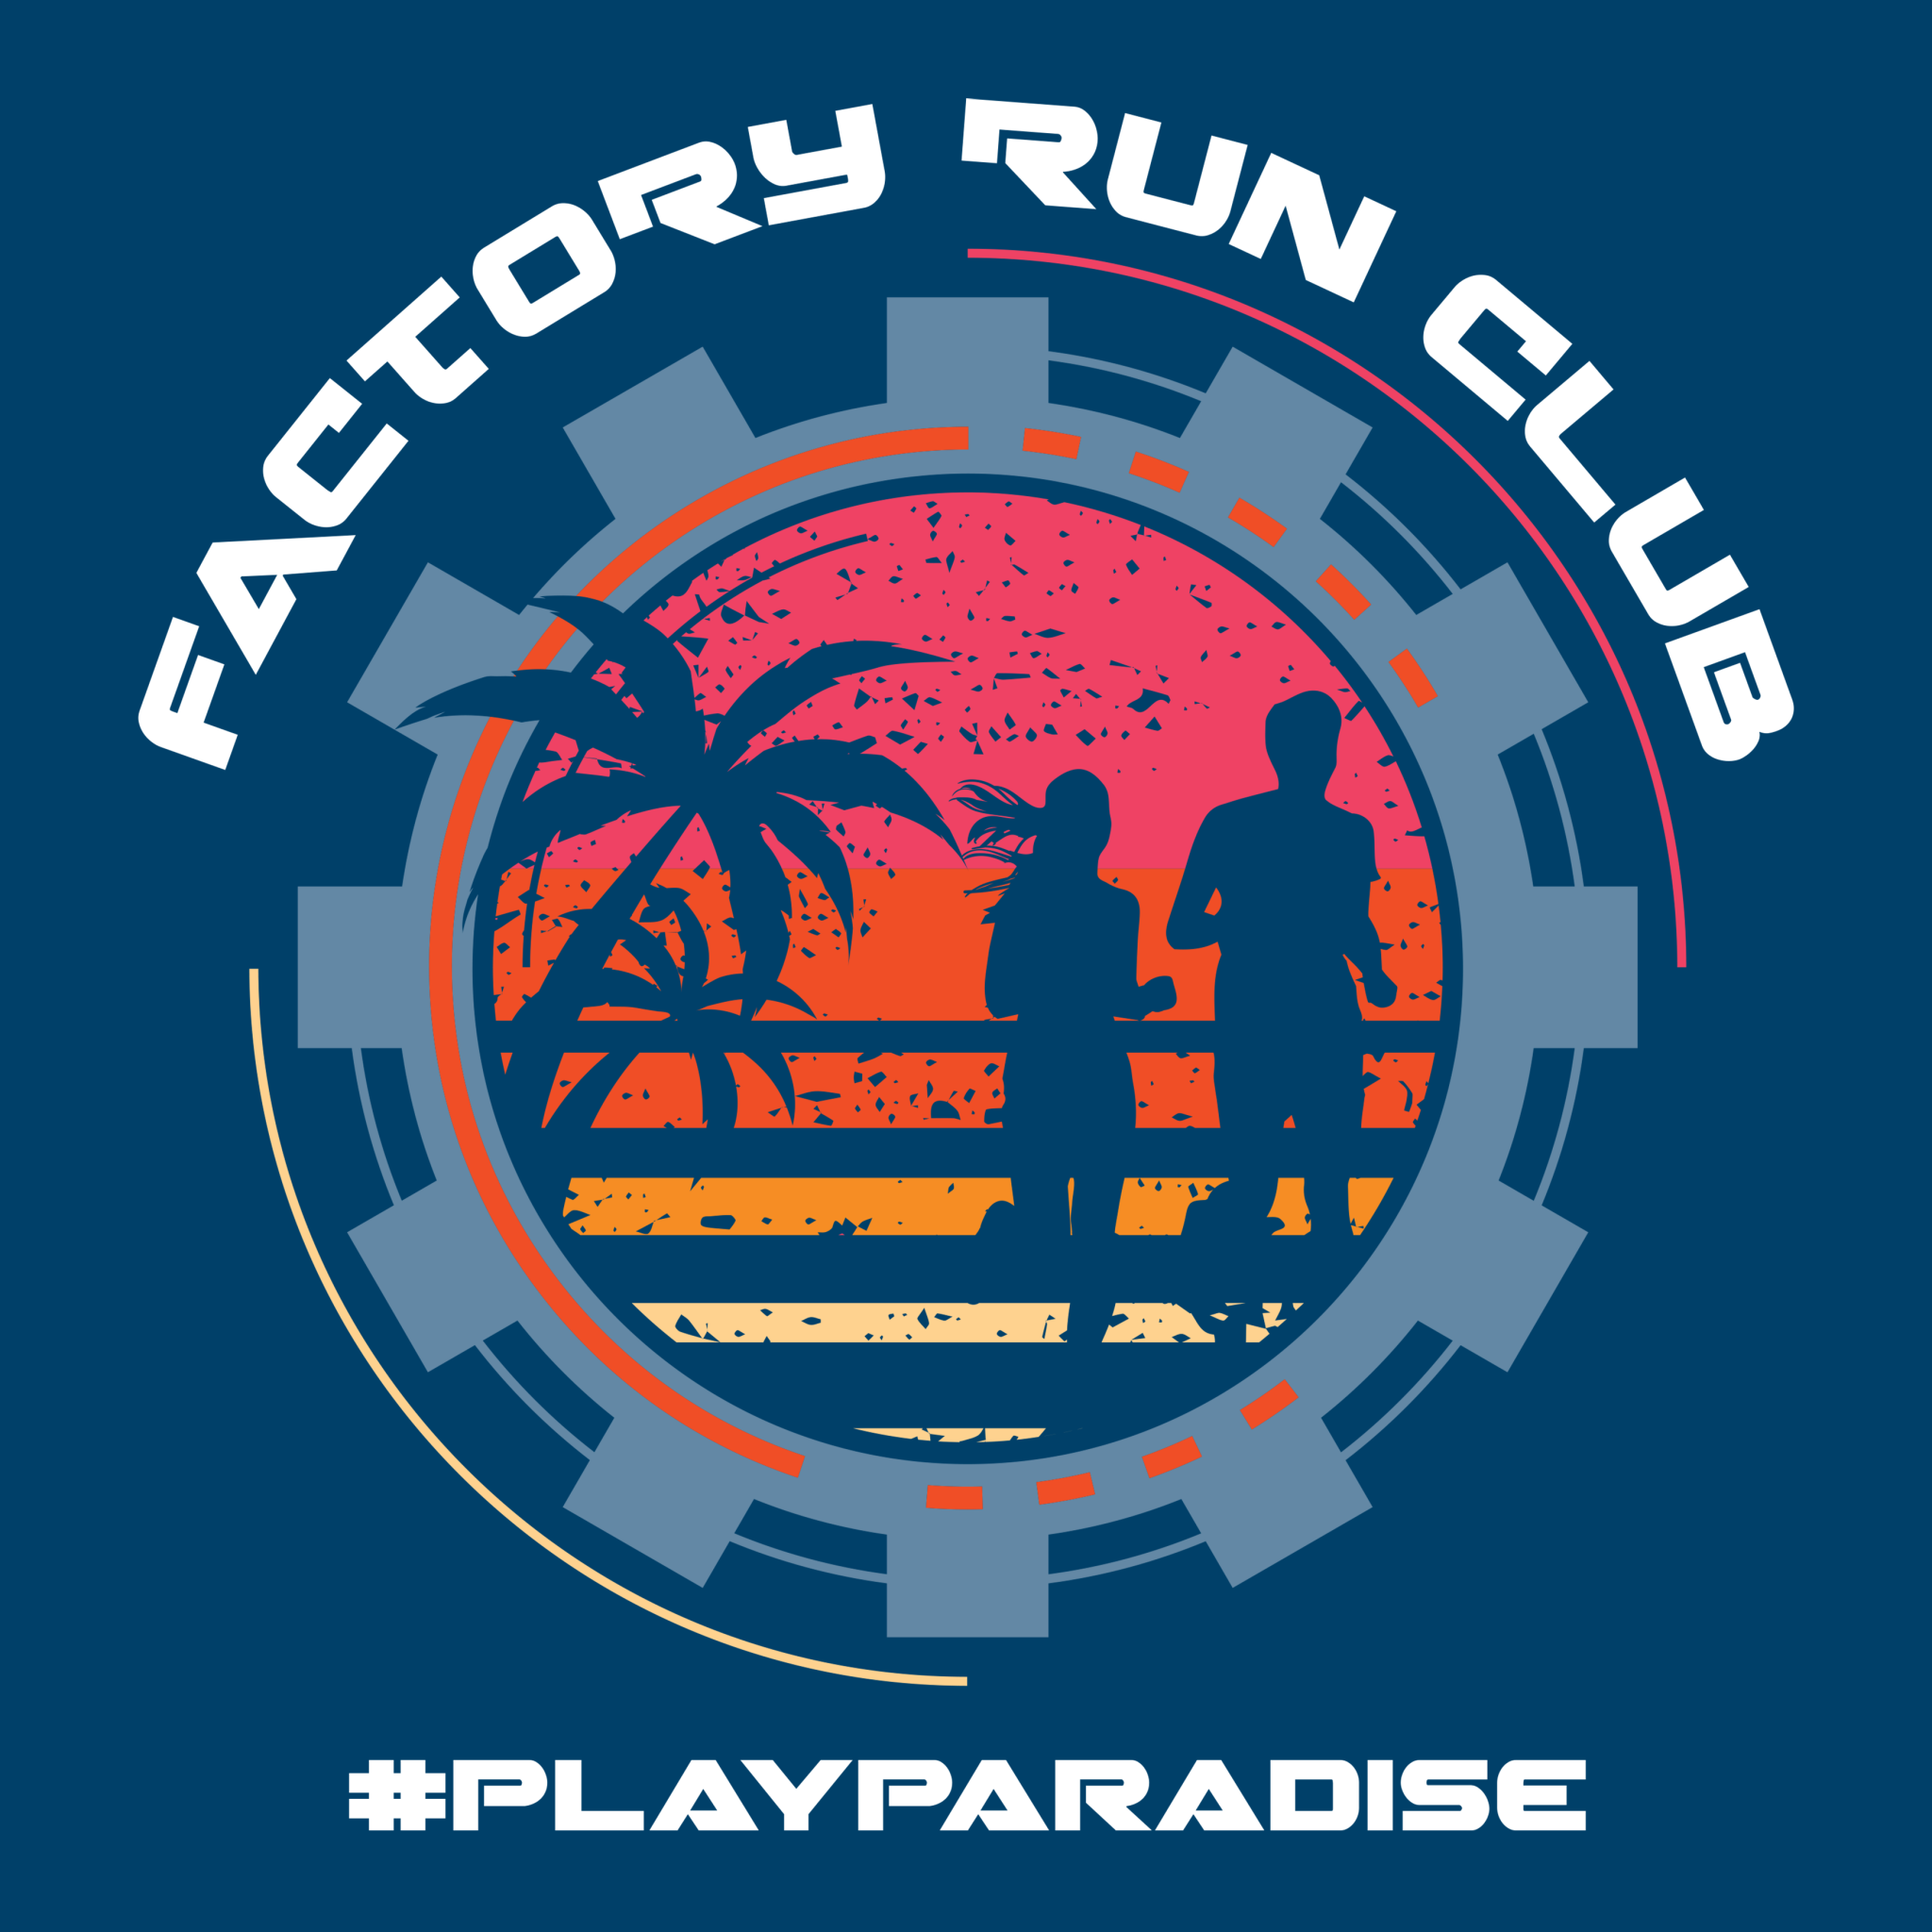 Factory Run Club Shirt logo MAIN CIRCLE WITH WORDS 2048x2048 1